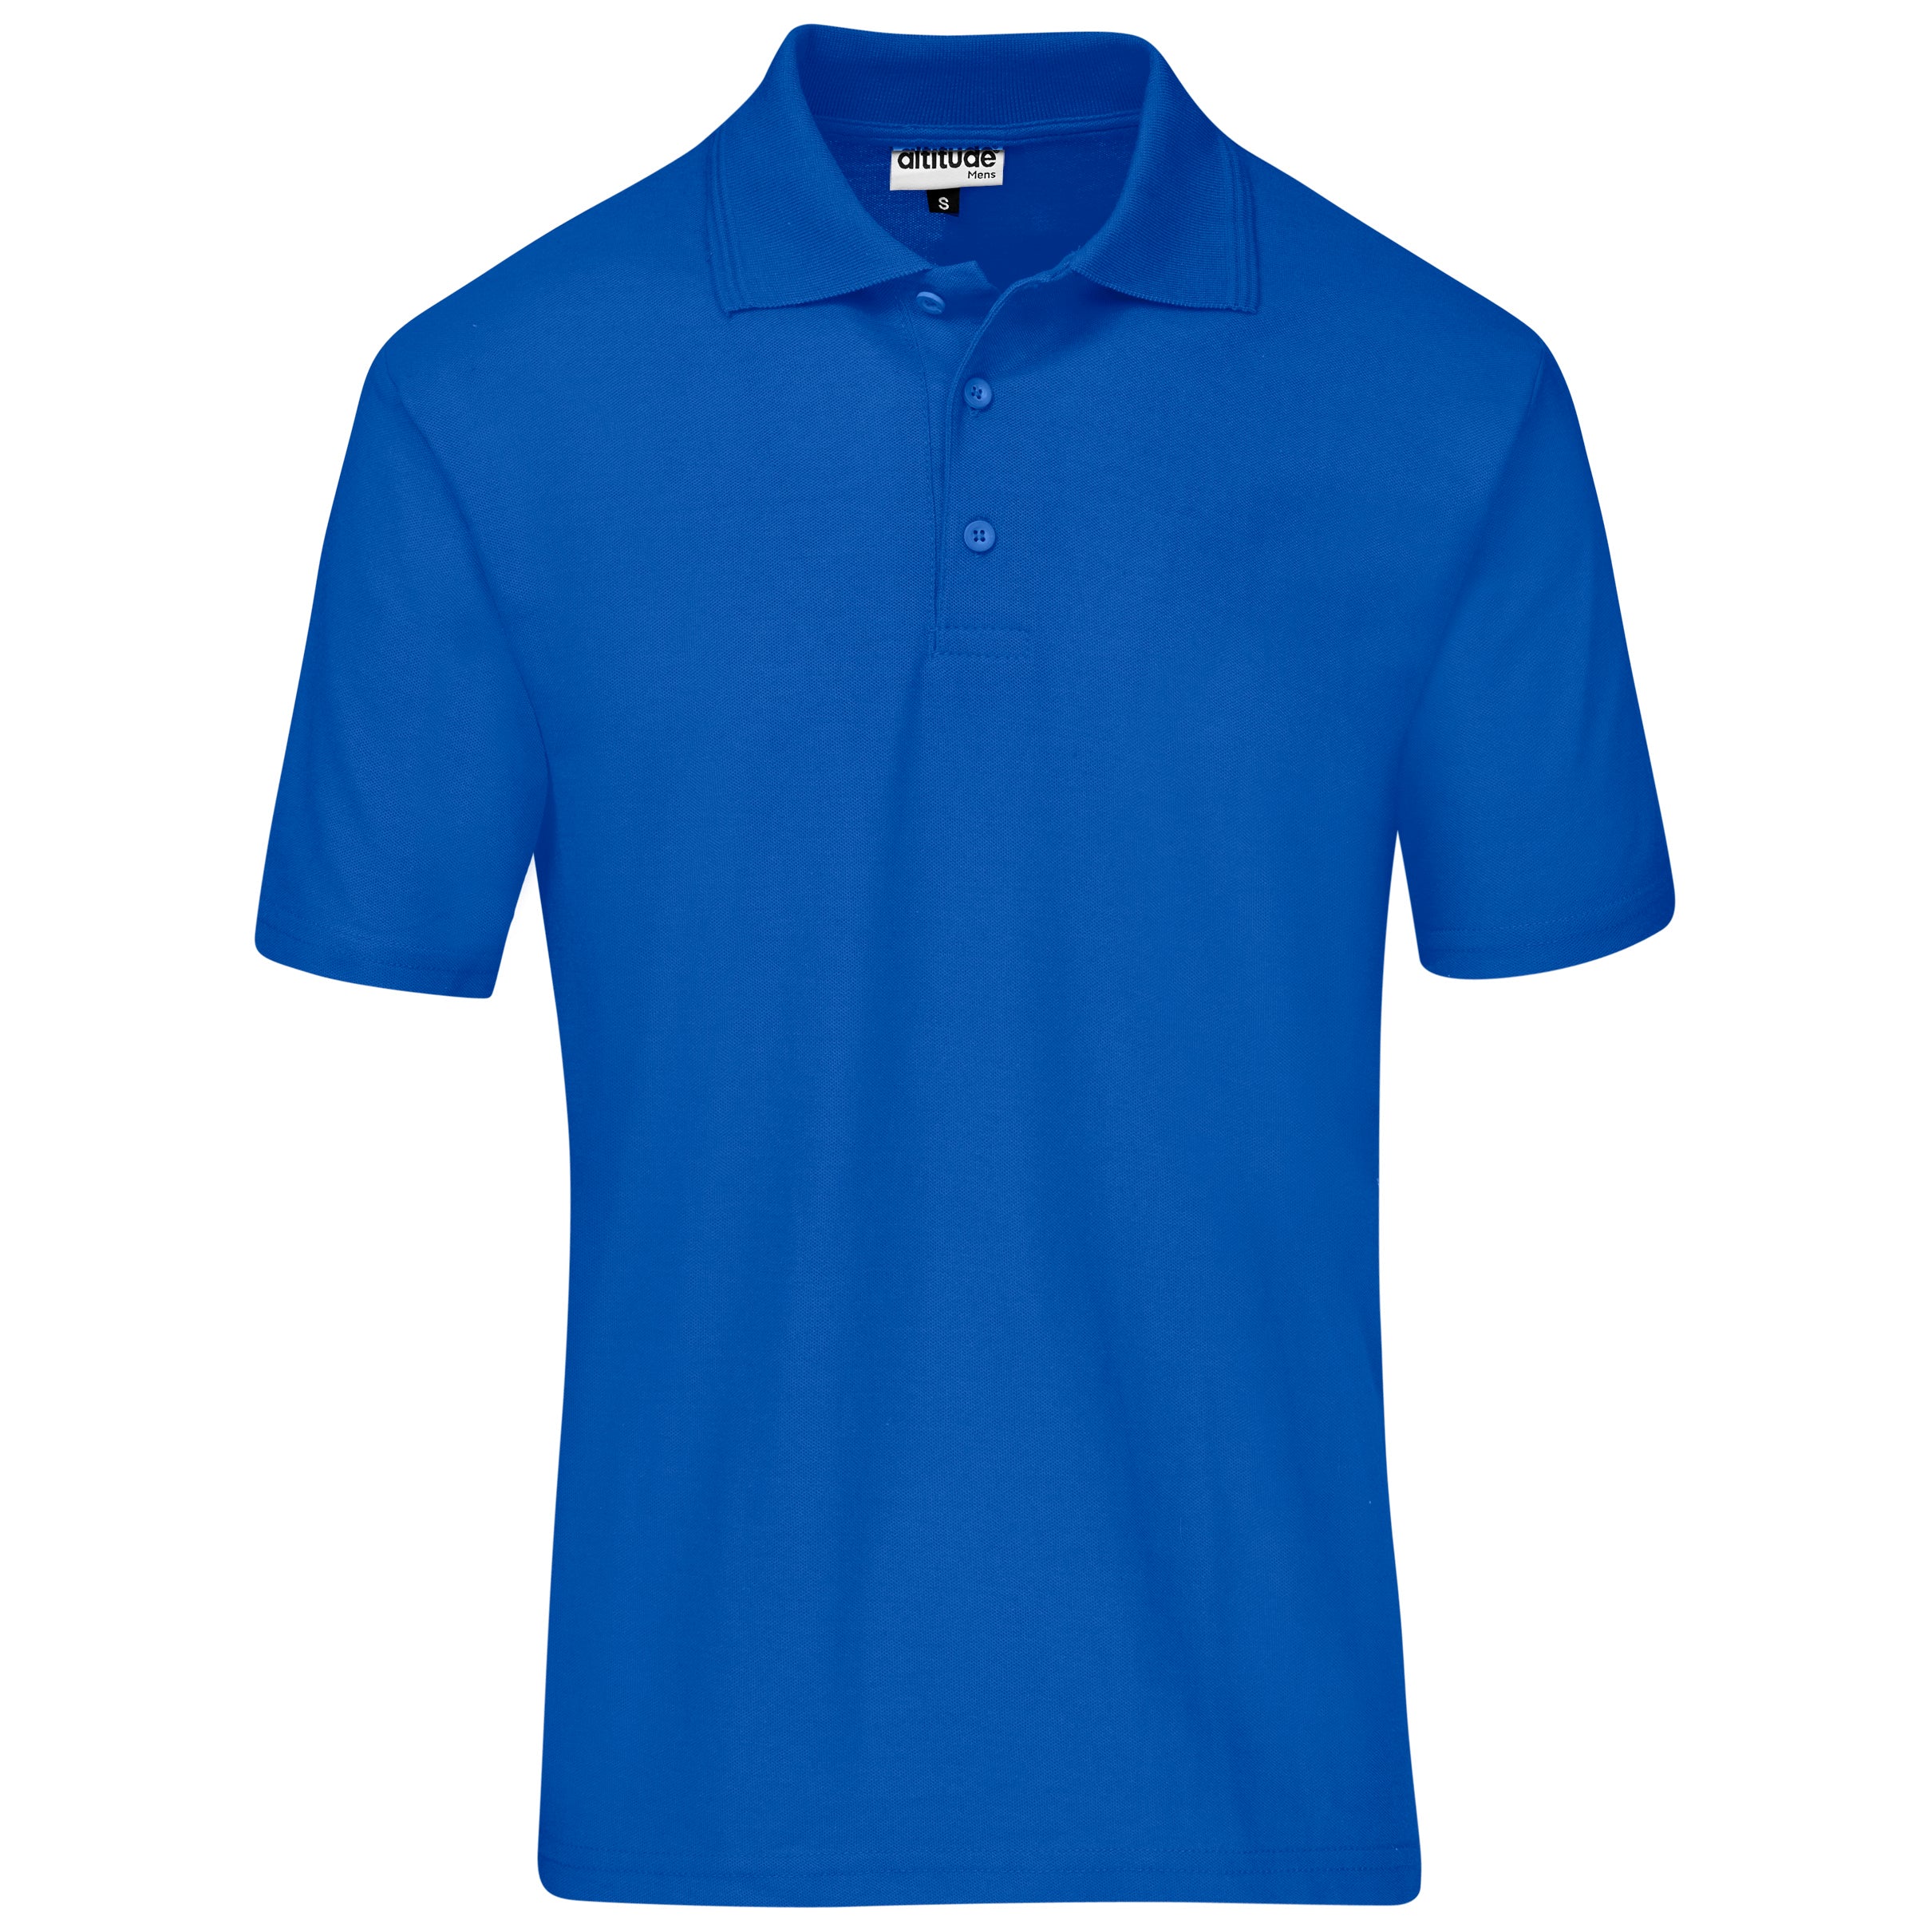 Mens Basic Pique Golf Shirt L / Royal Blue / RB